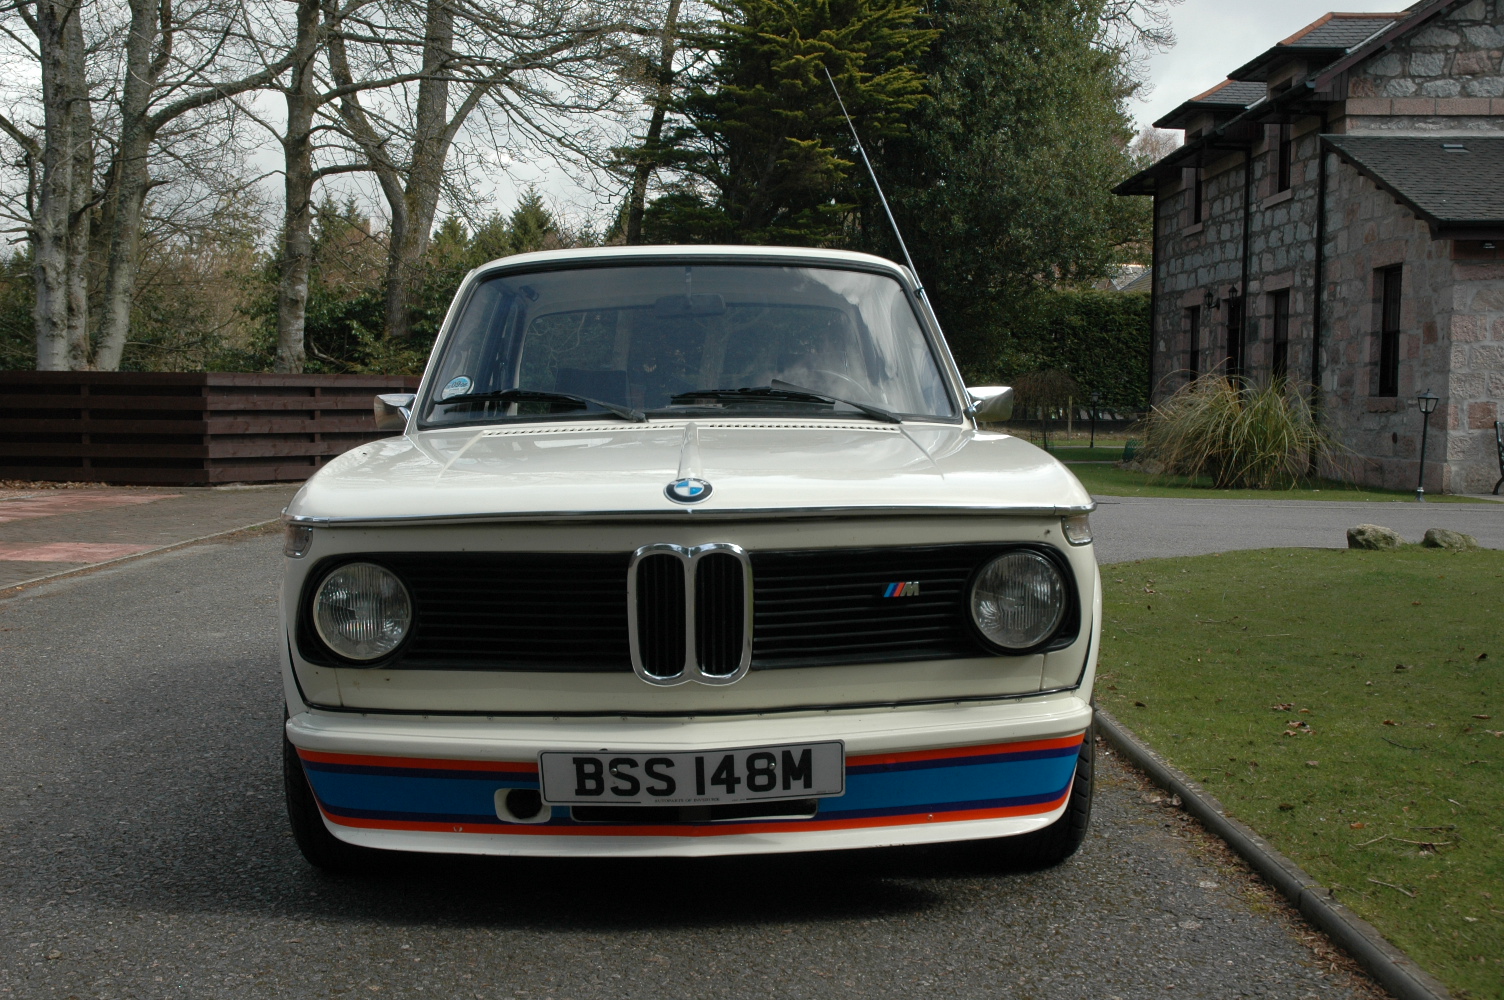 BMW 2002 turbo | Flickr - Photo Sharing!